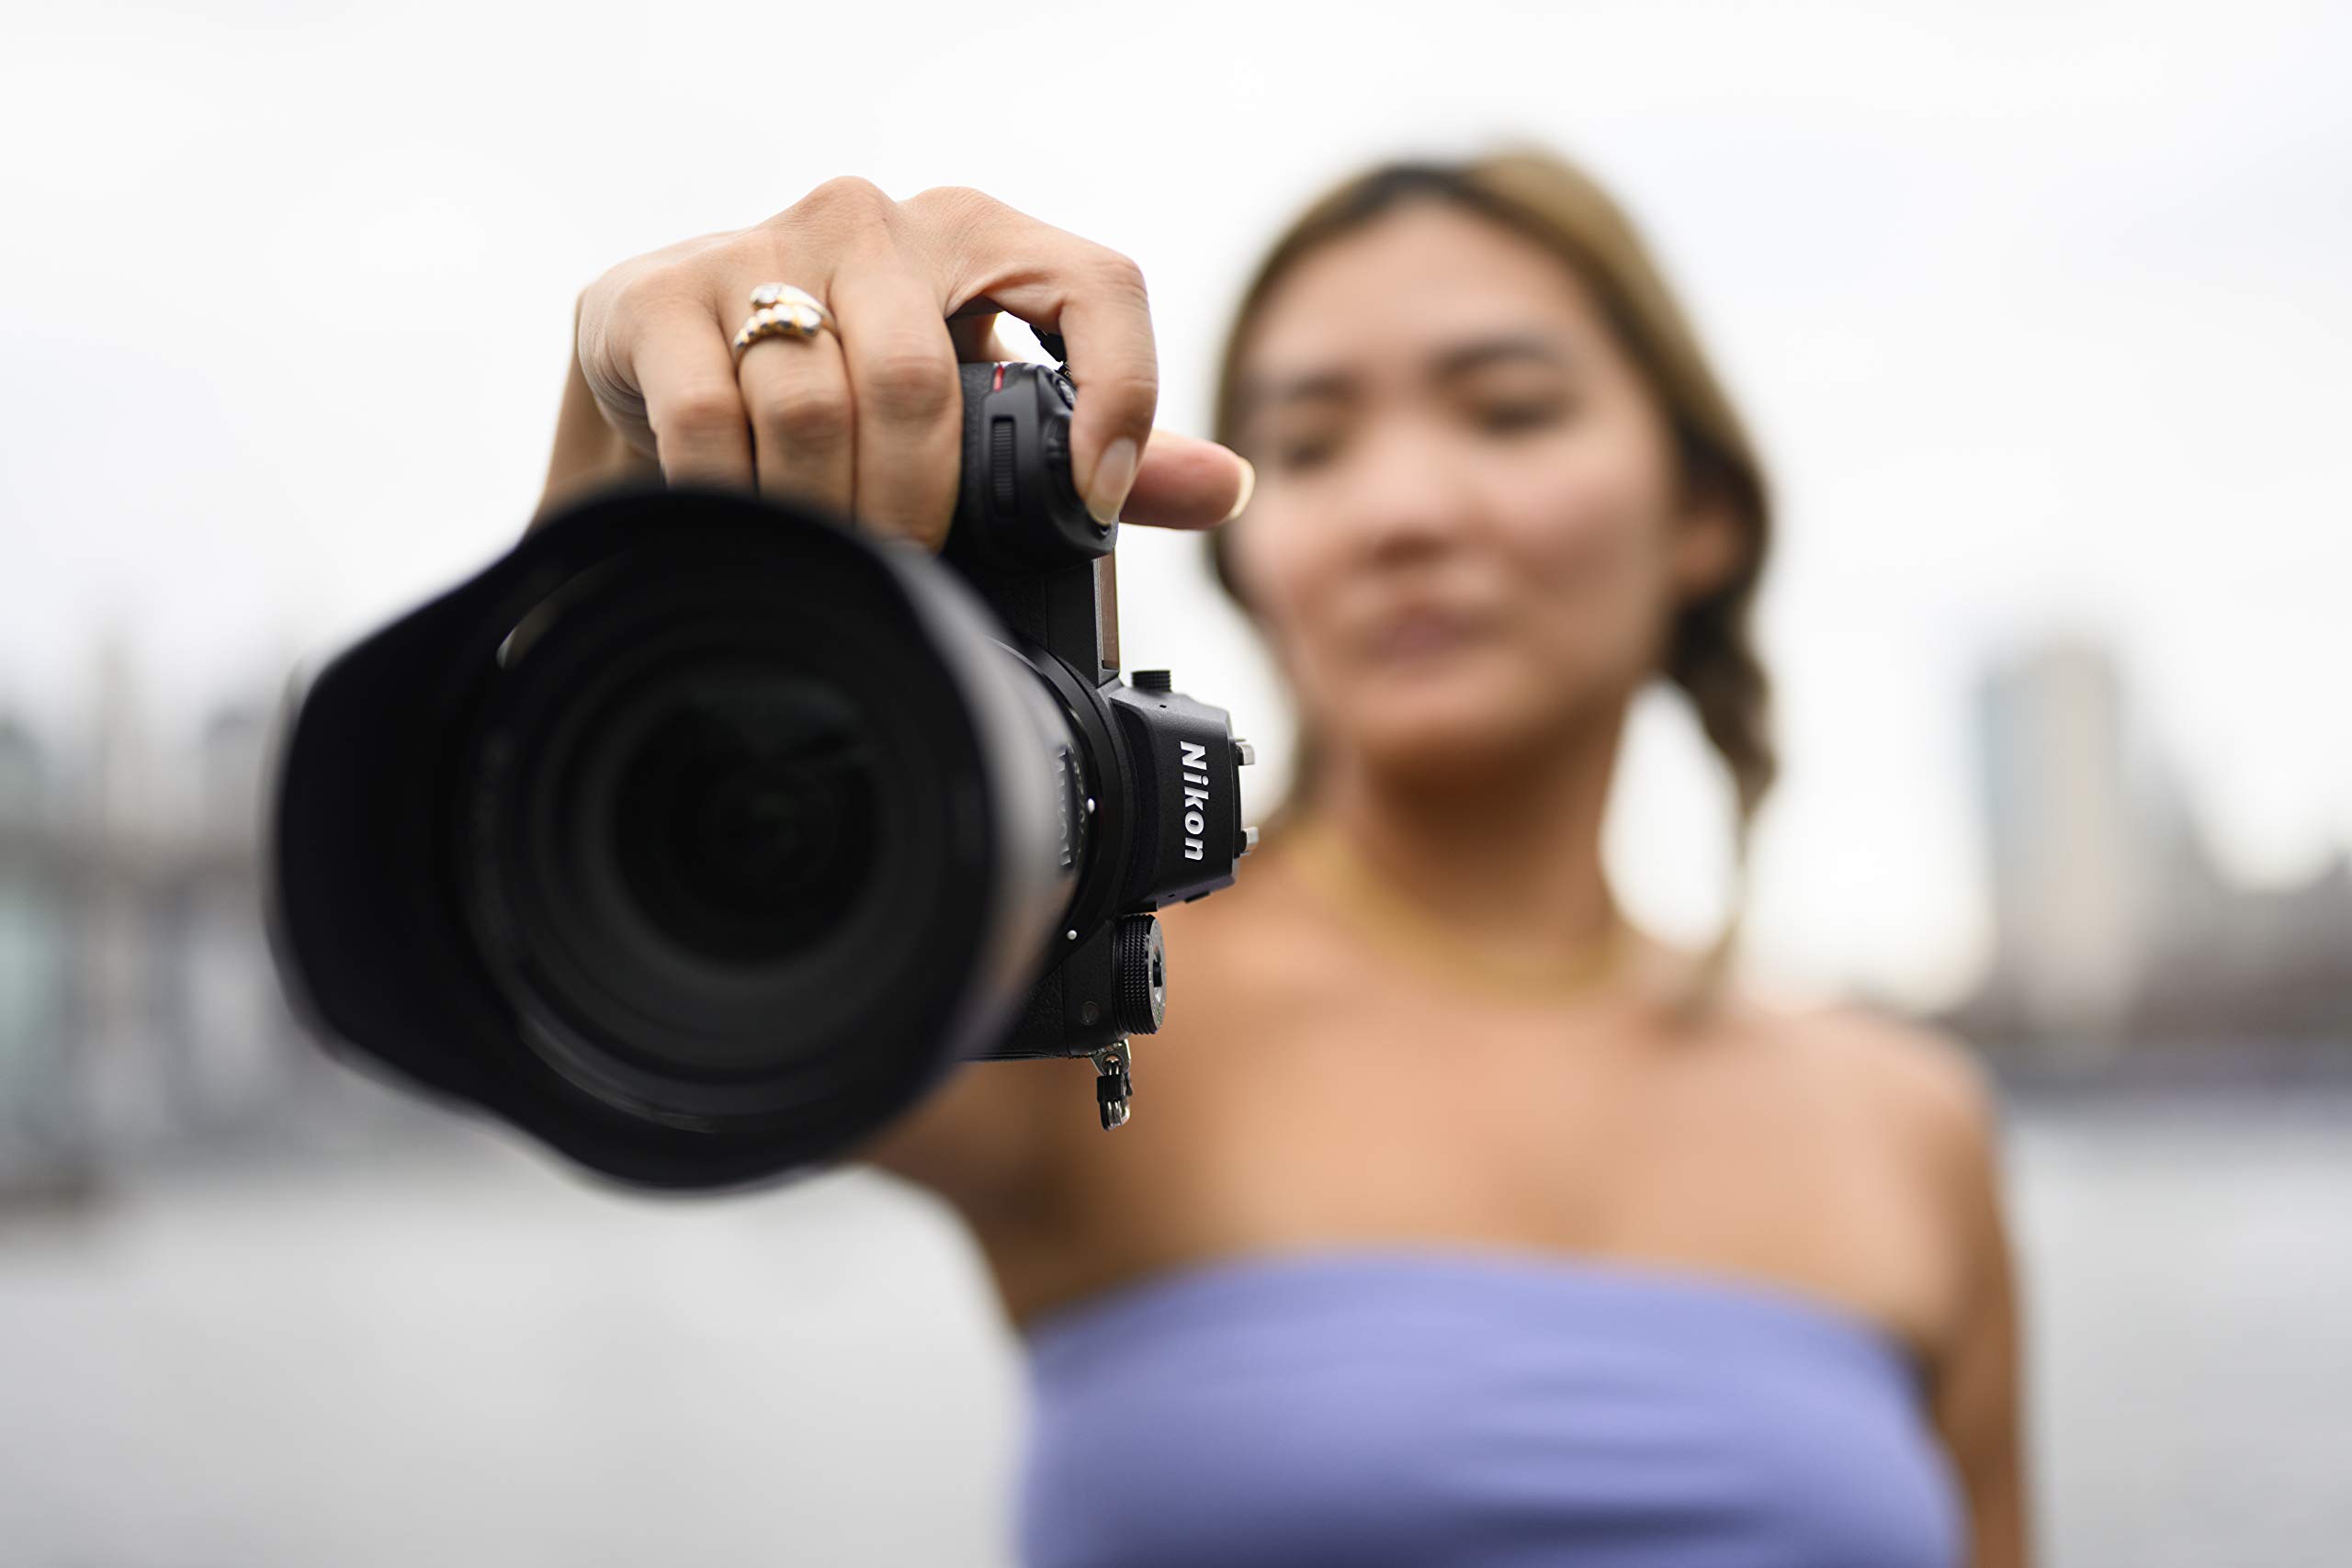 Nikon Z 6II with Zoom Lens | Versatile Full-Frame mirrorless Stills/Video Hybrid Camera with 24-70mm f/4 Lens | Nikon USA Model